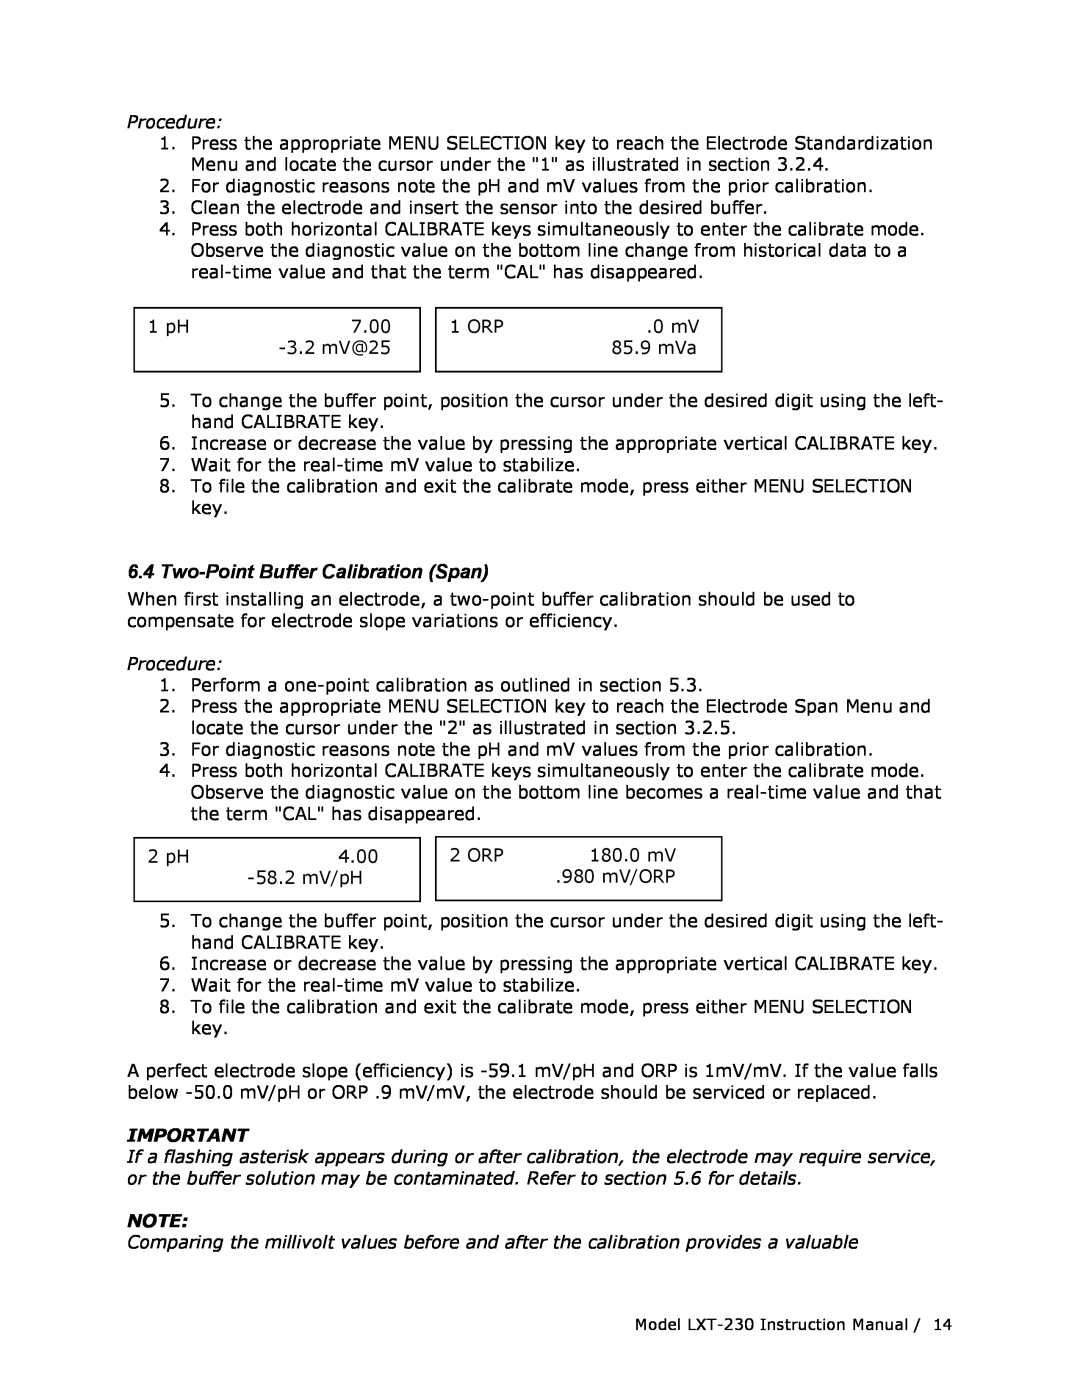 Teledyne LXT-230 manual 6.4Two-PointBuffer Calibration Span, Procedure 